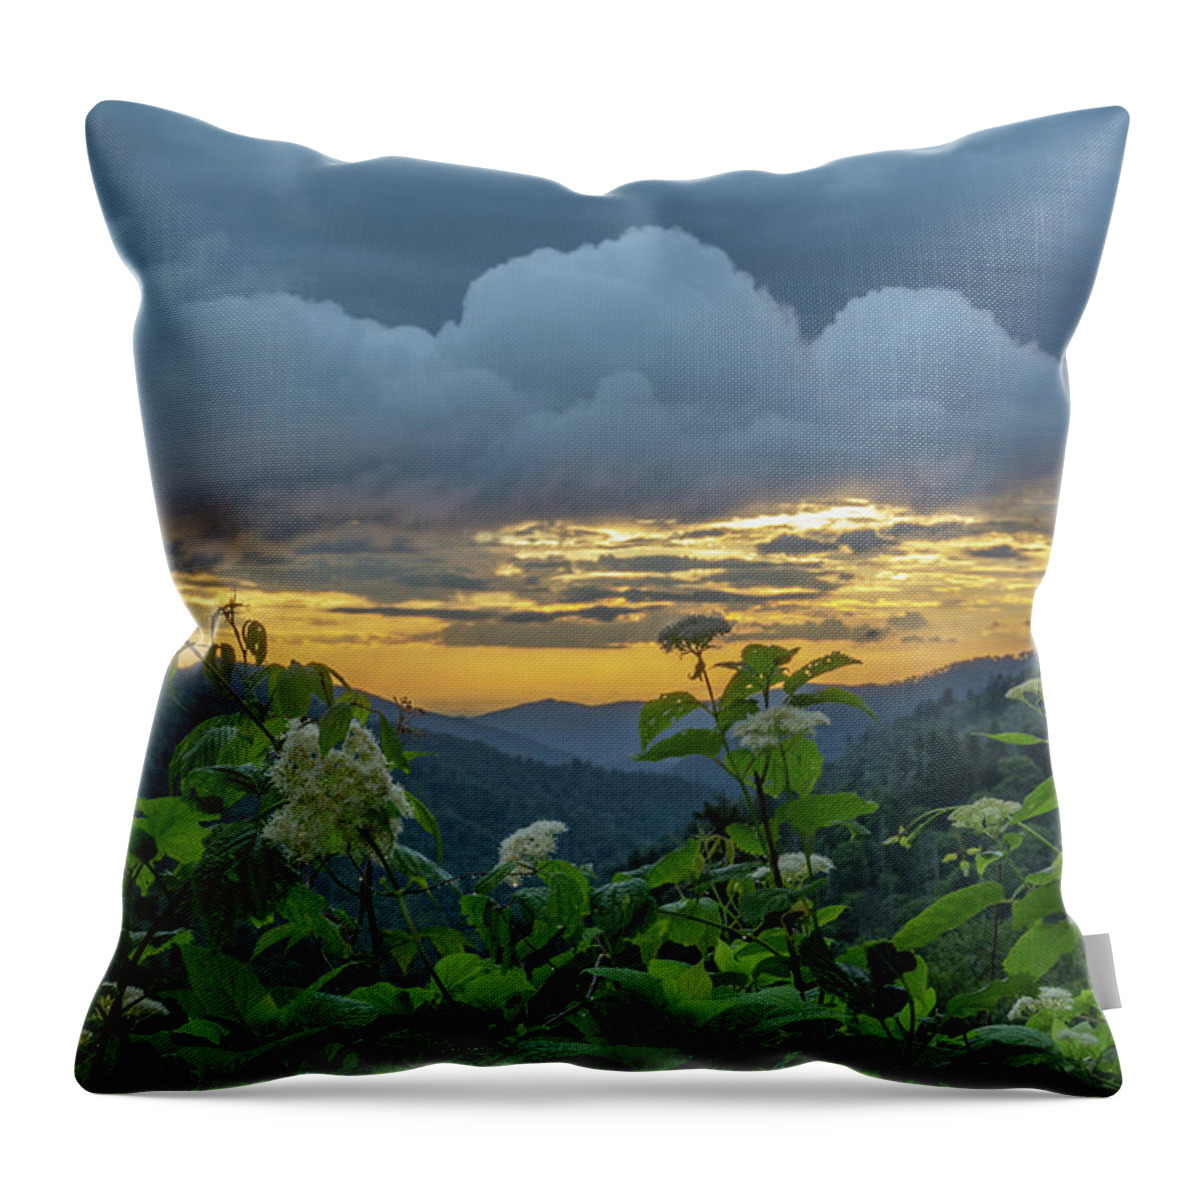 Smoky Throw Pillow featuring the photograph Morton Overlook After Storm by Douglas Wielfaert